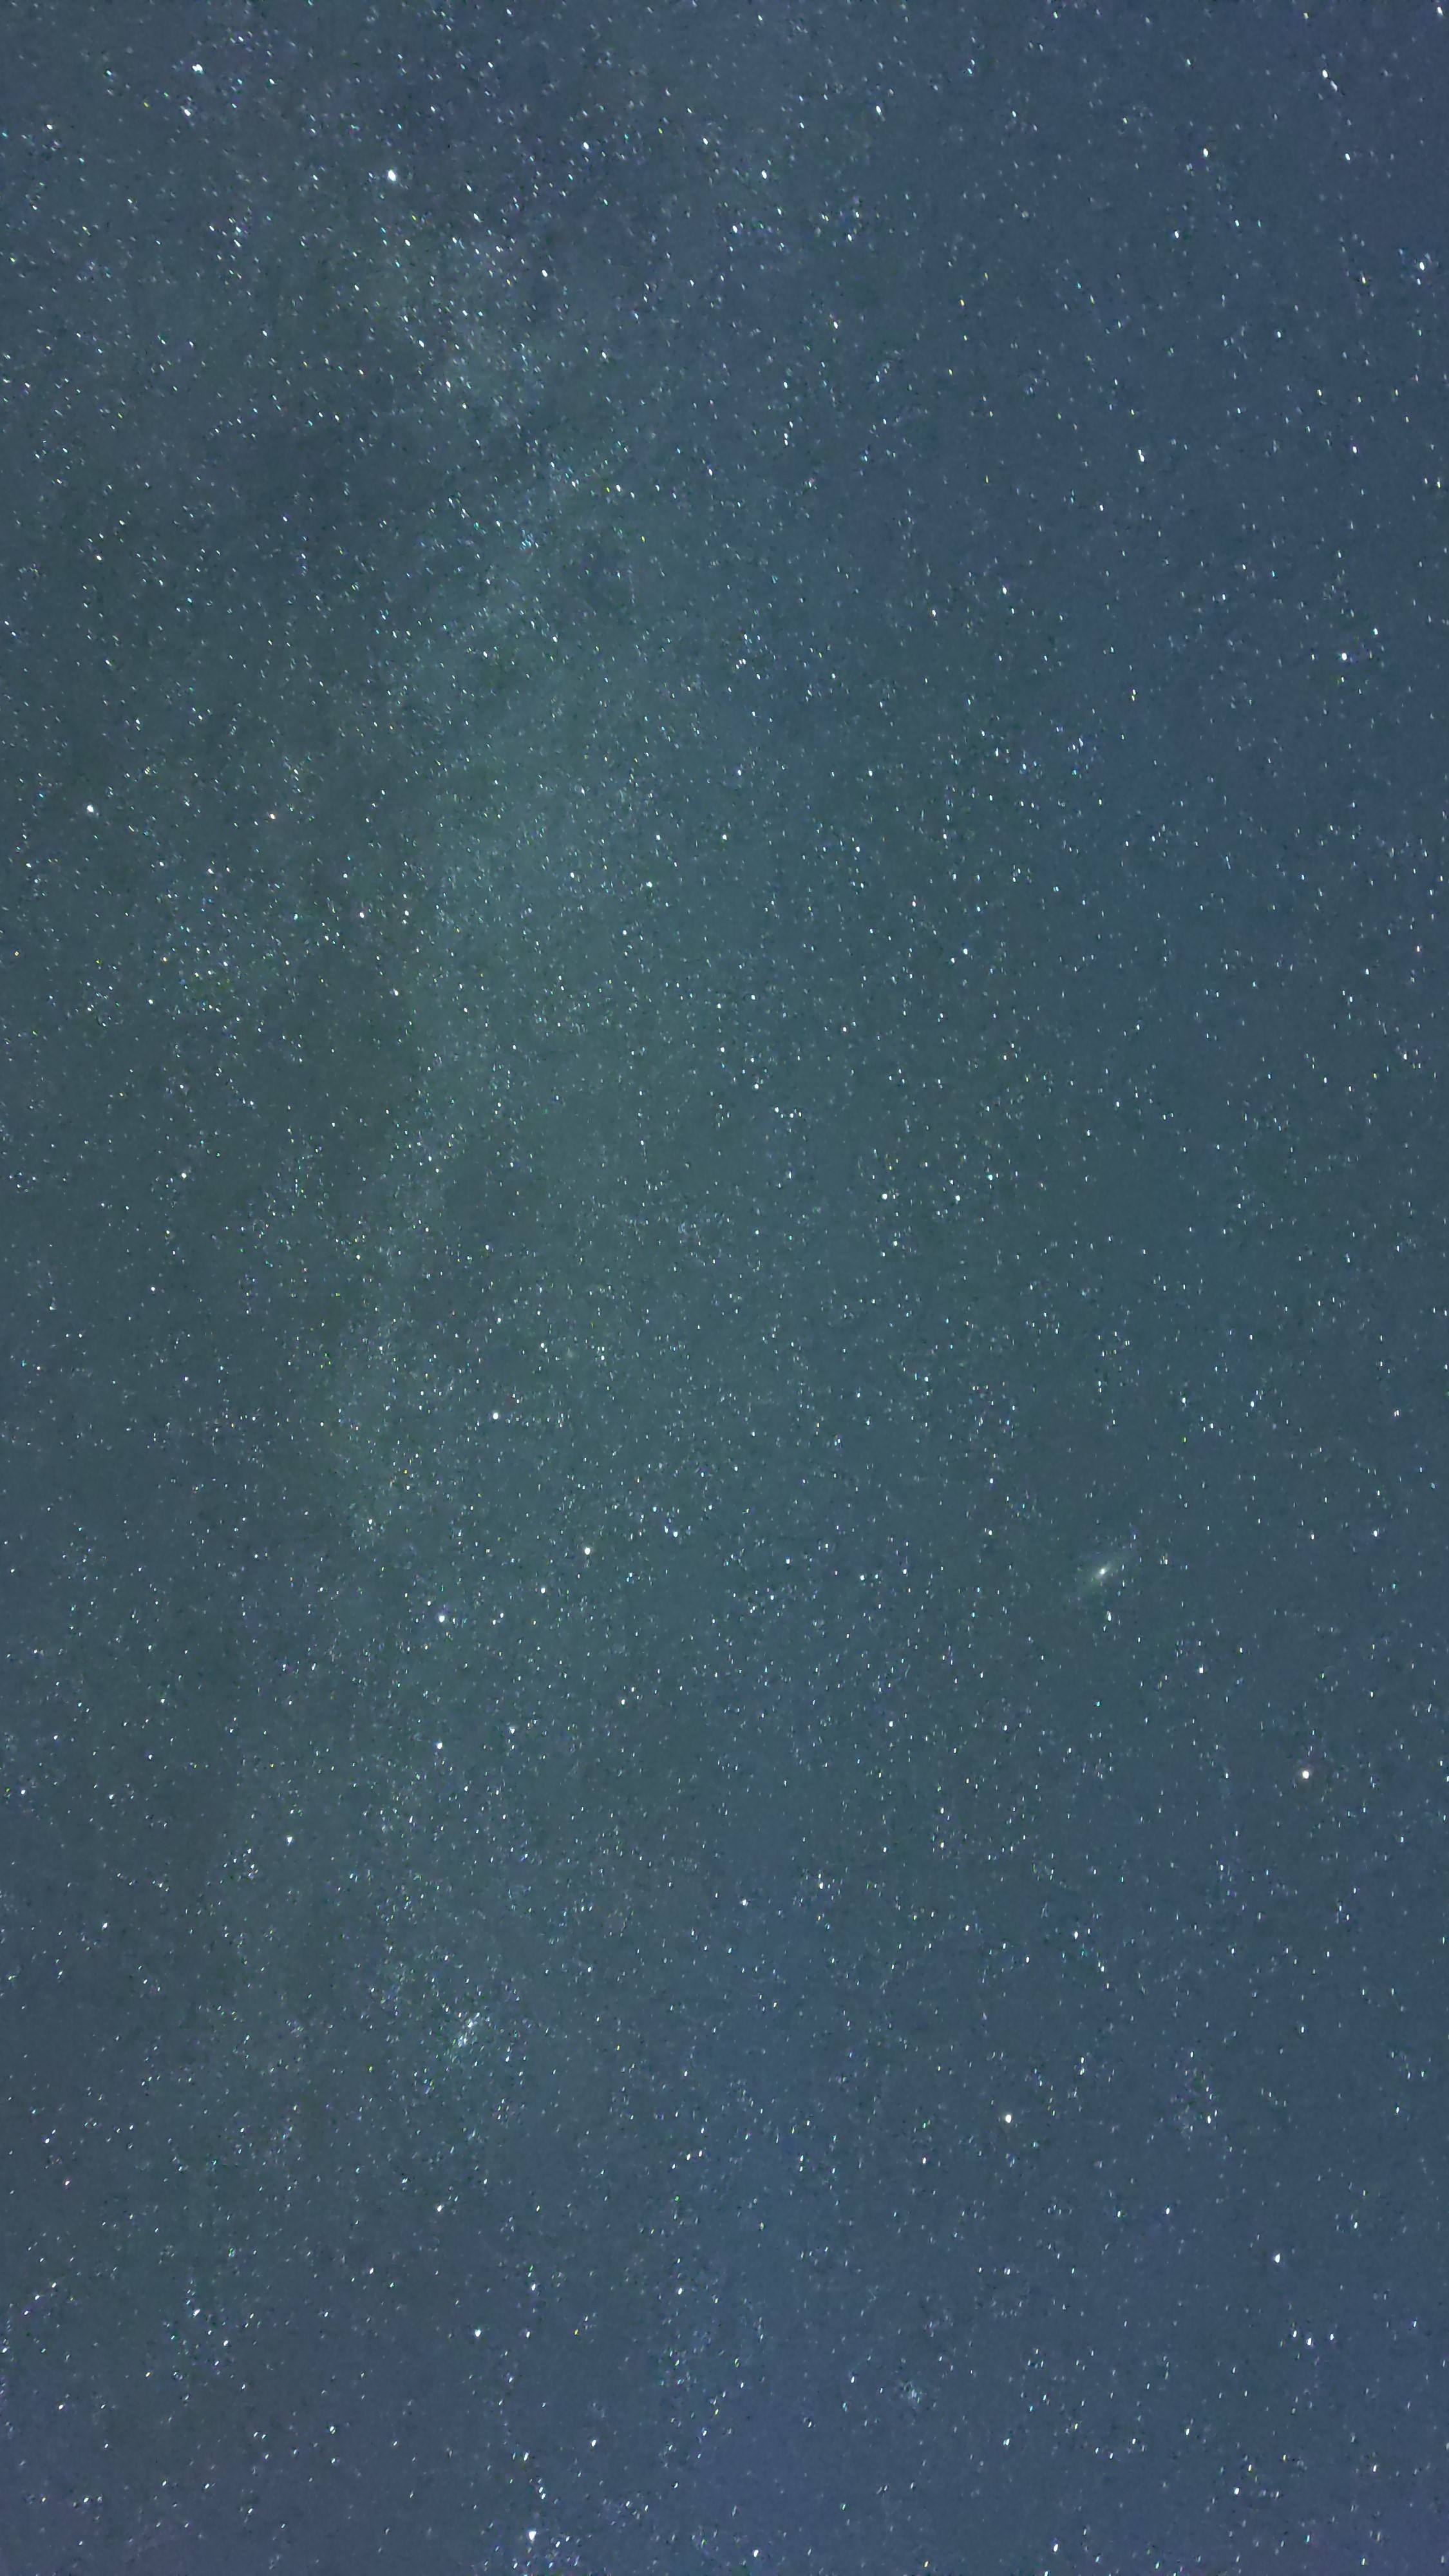 galaxy-sky-photos-with-smartphone-07-exposure-check-mode.jpg